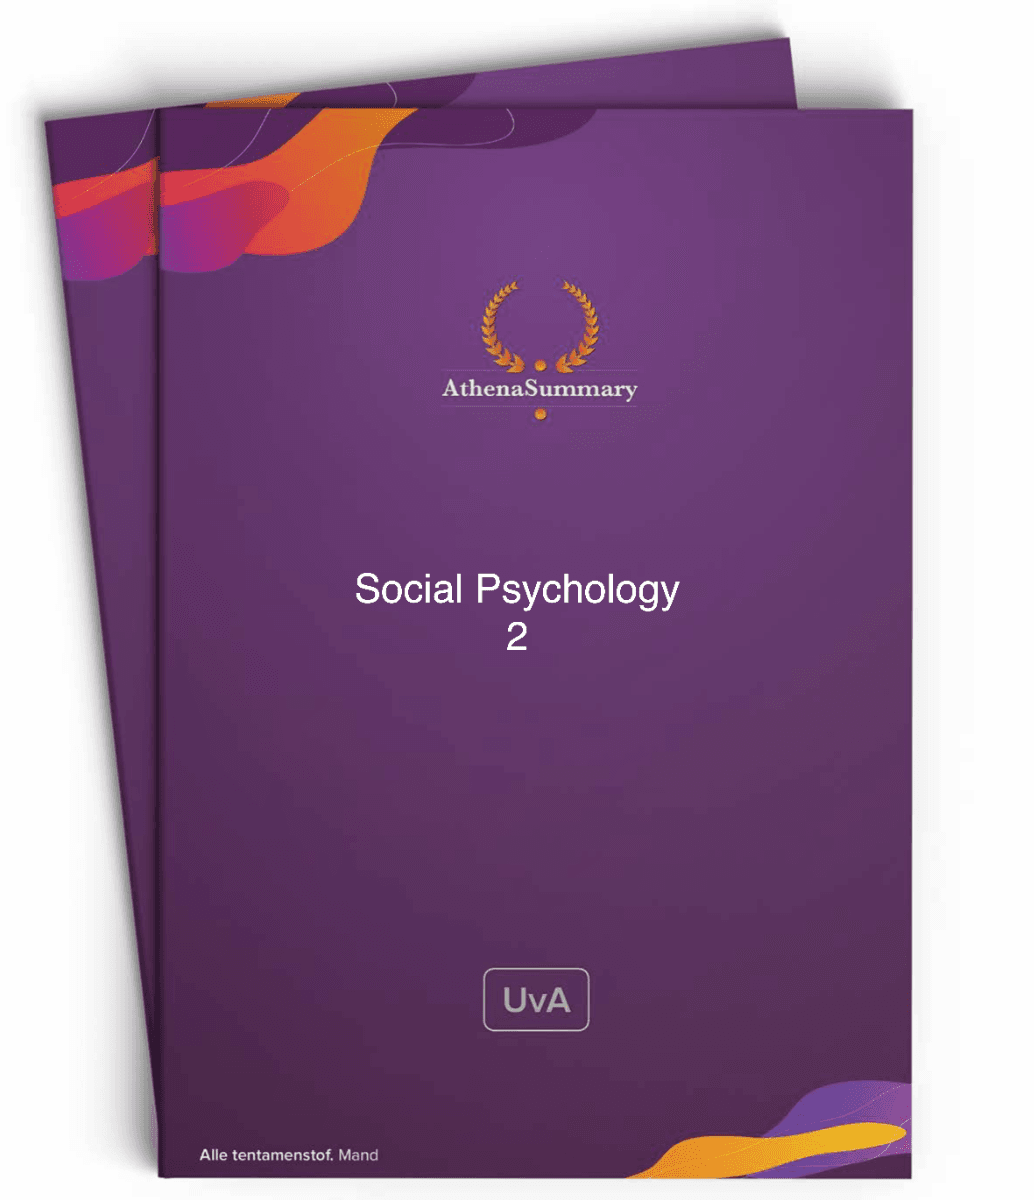 Literature Summary: Social Psychology - 2